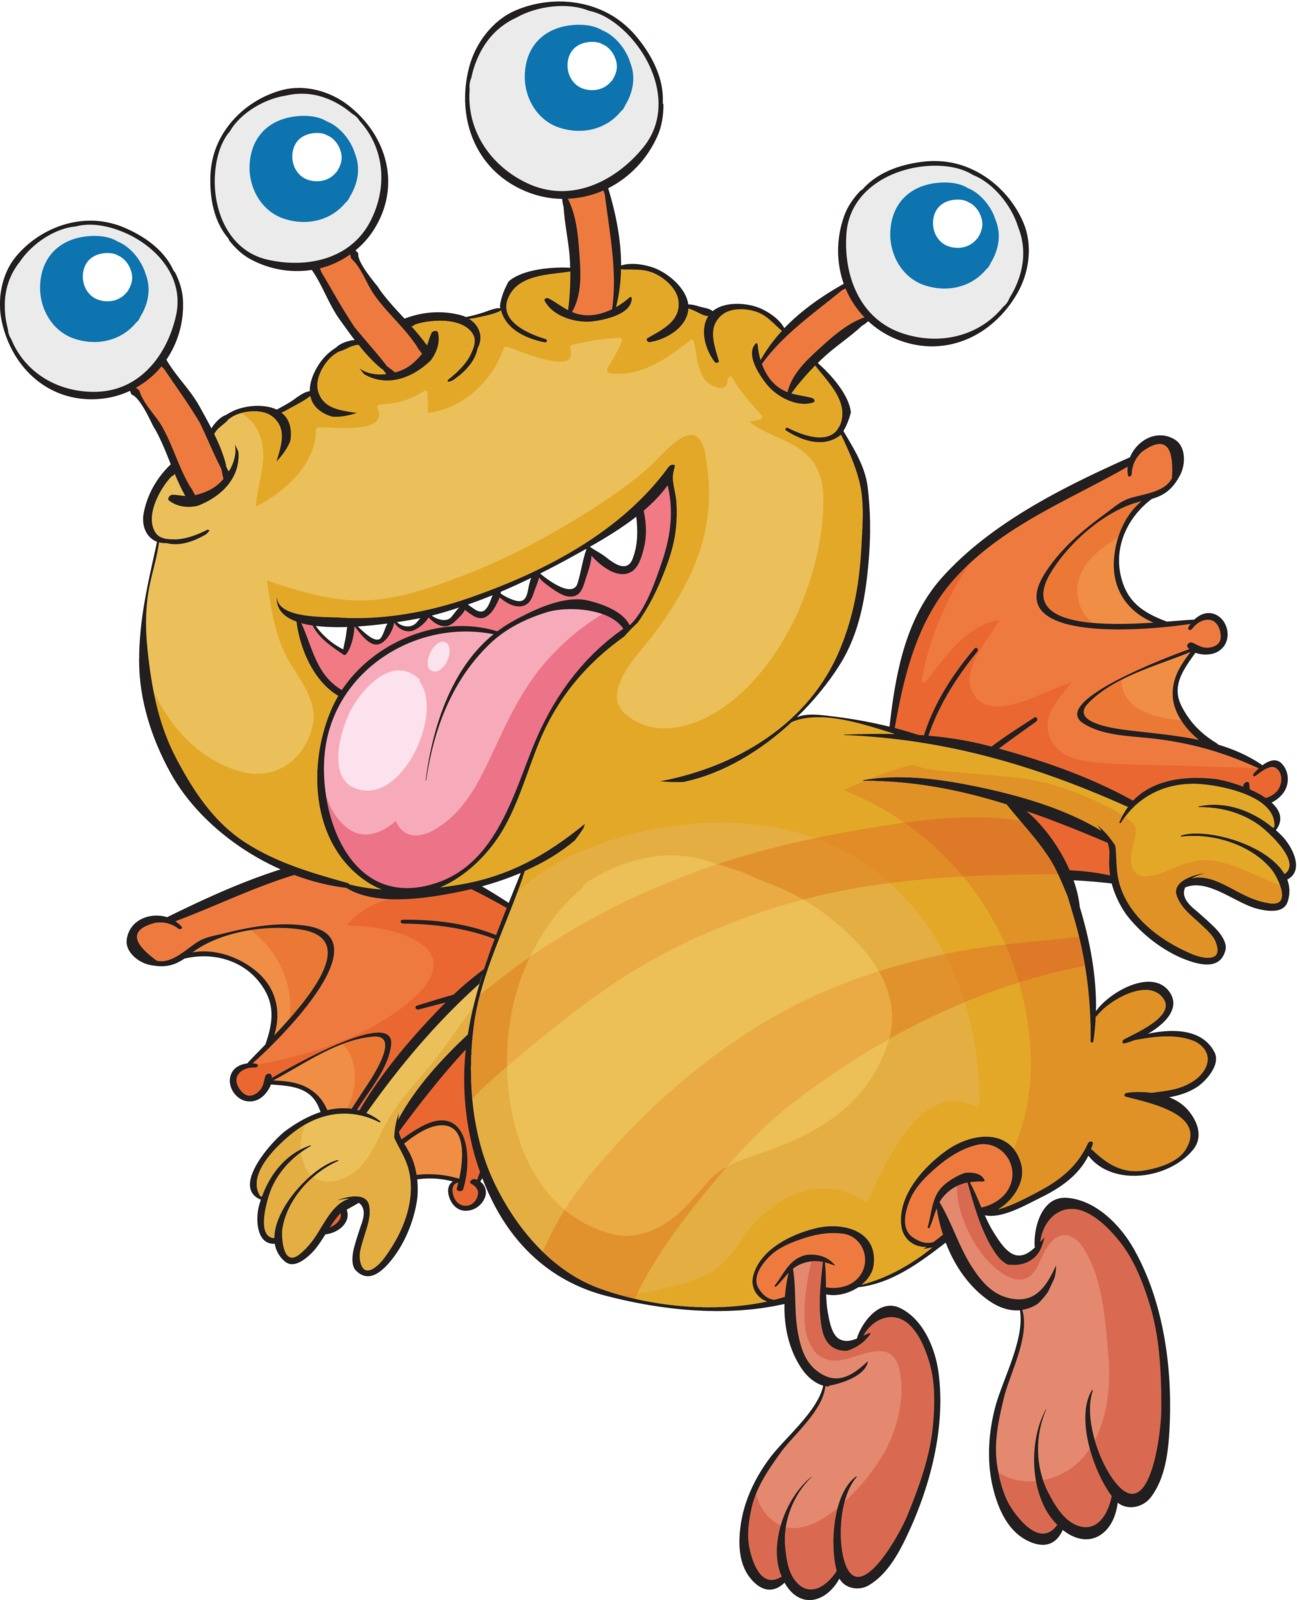 Illustration of a flying orange monster